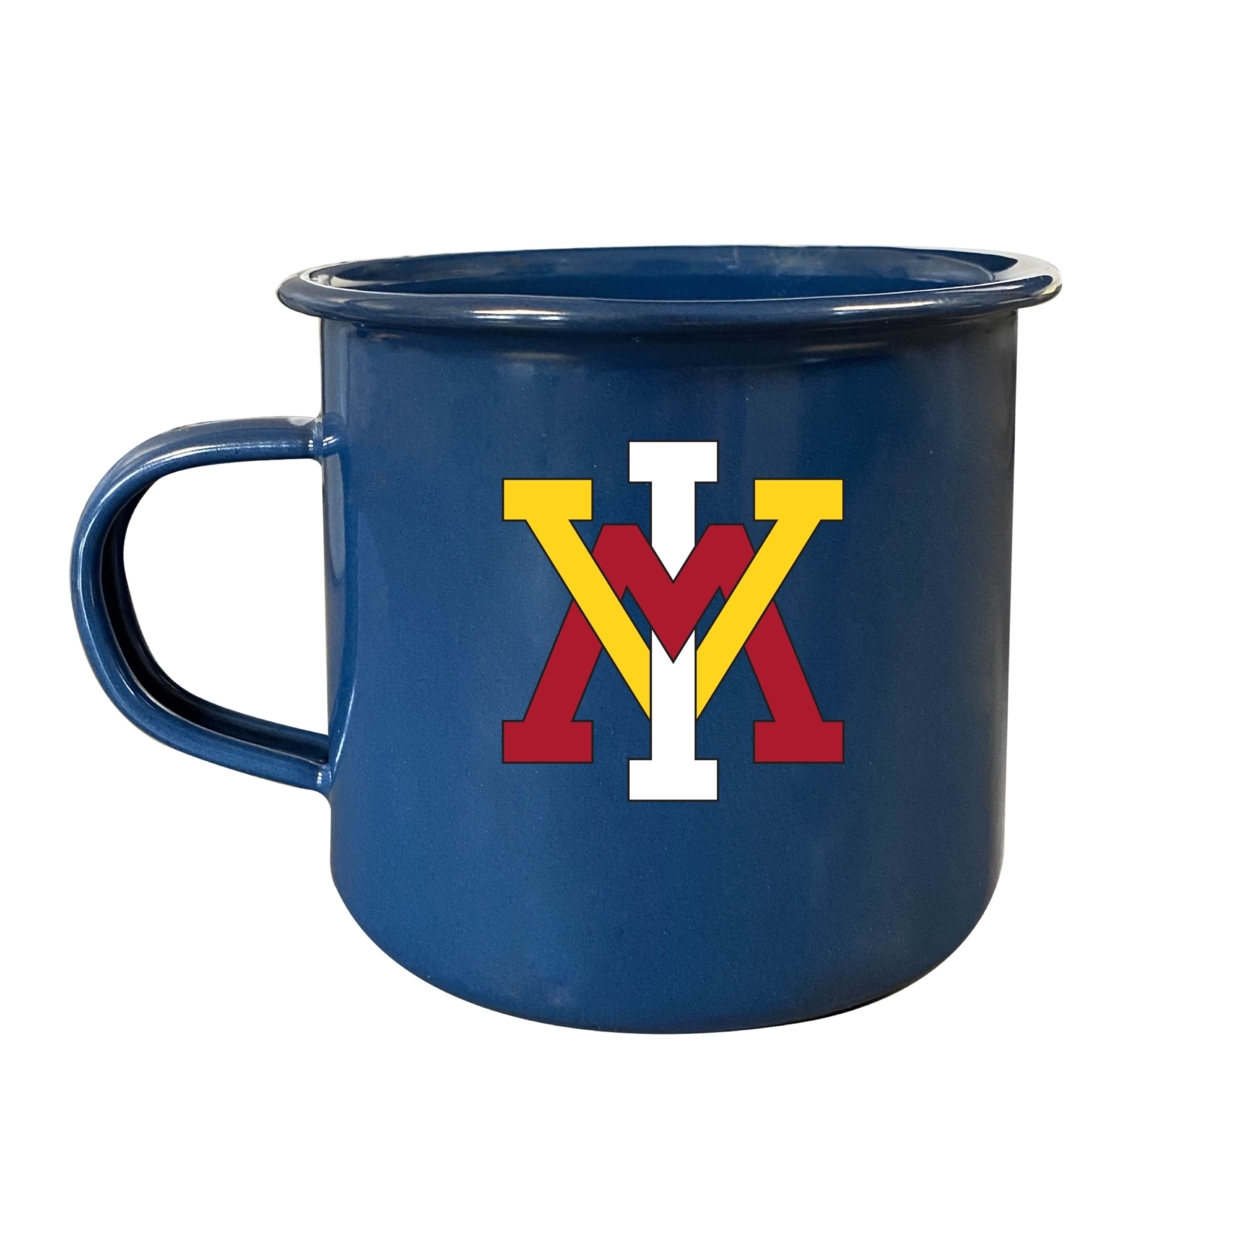 VMI Keydets Tin Camper Coffee Mug - Choose Your Color - White